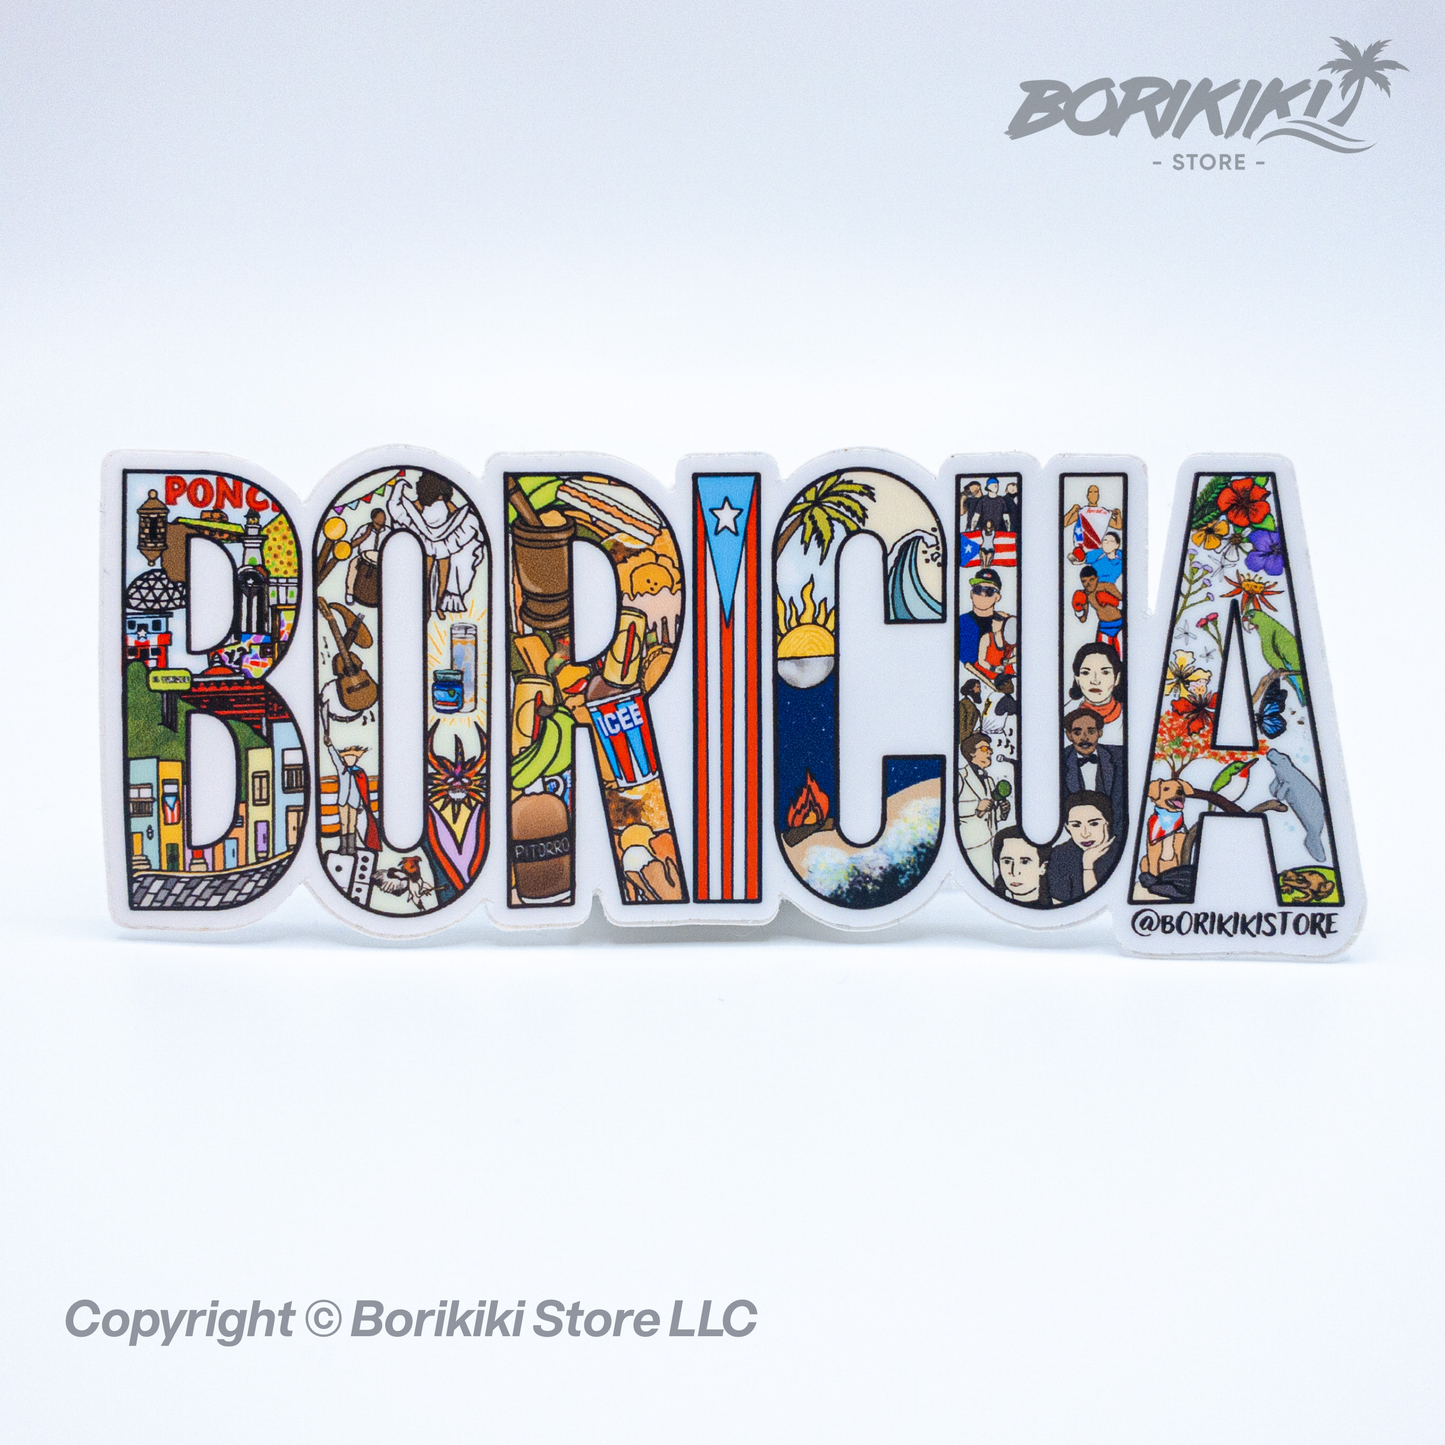 BORICUA - Premium Matte Sticker